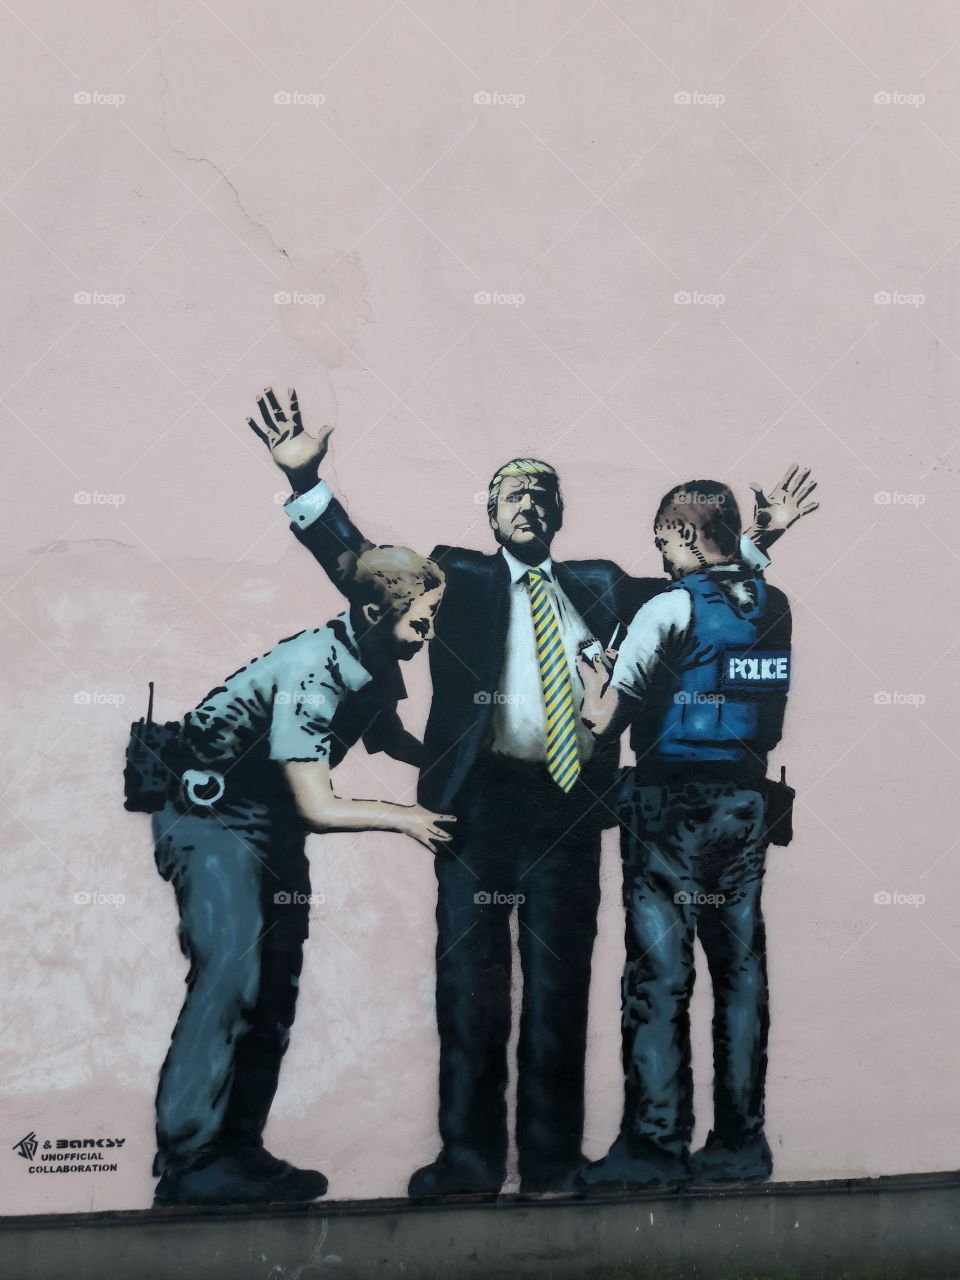 Donald trump being frisked (street art)